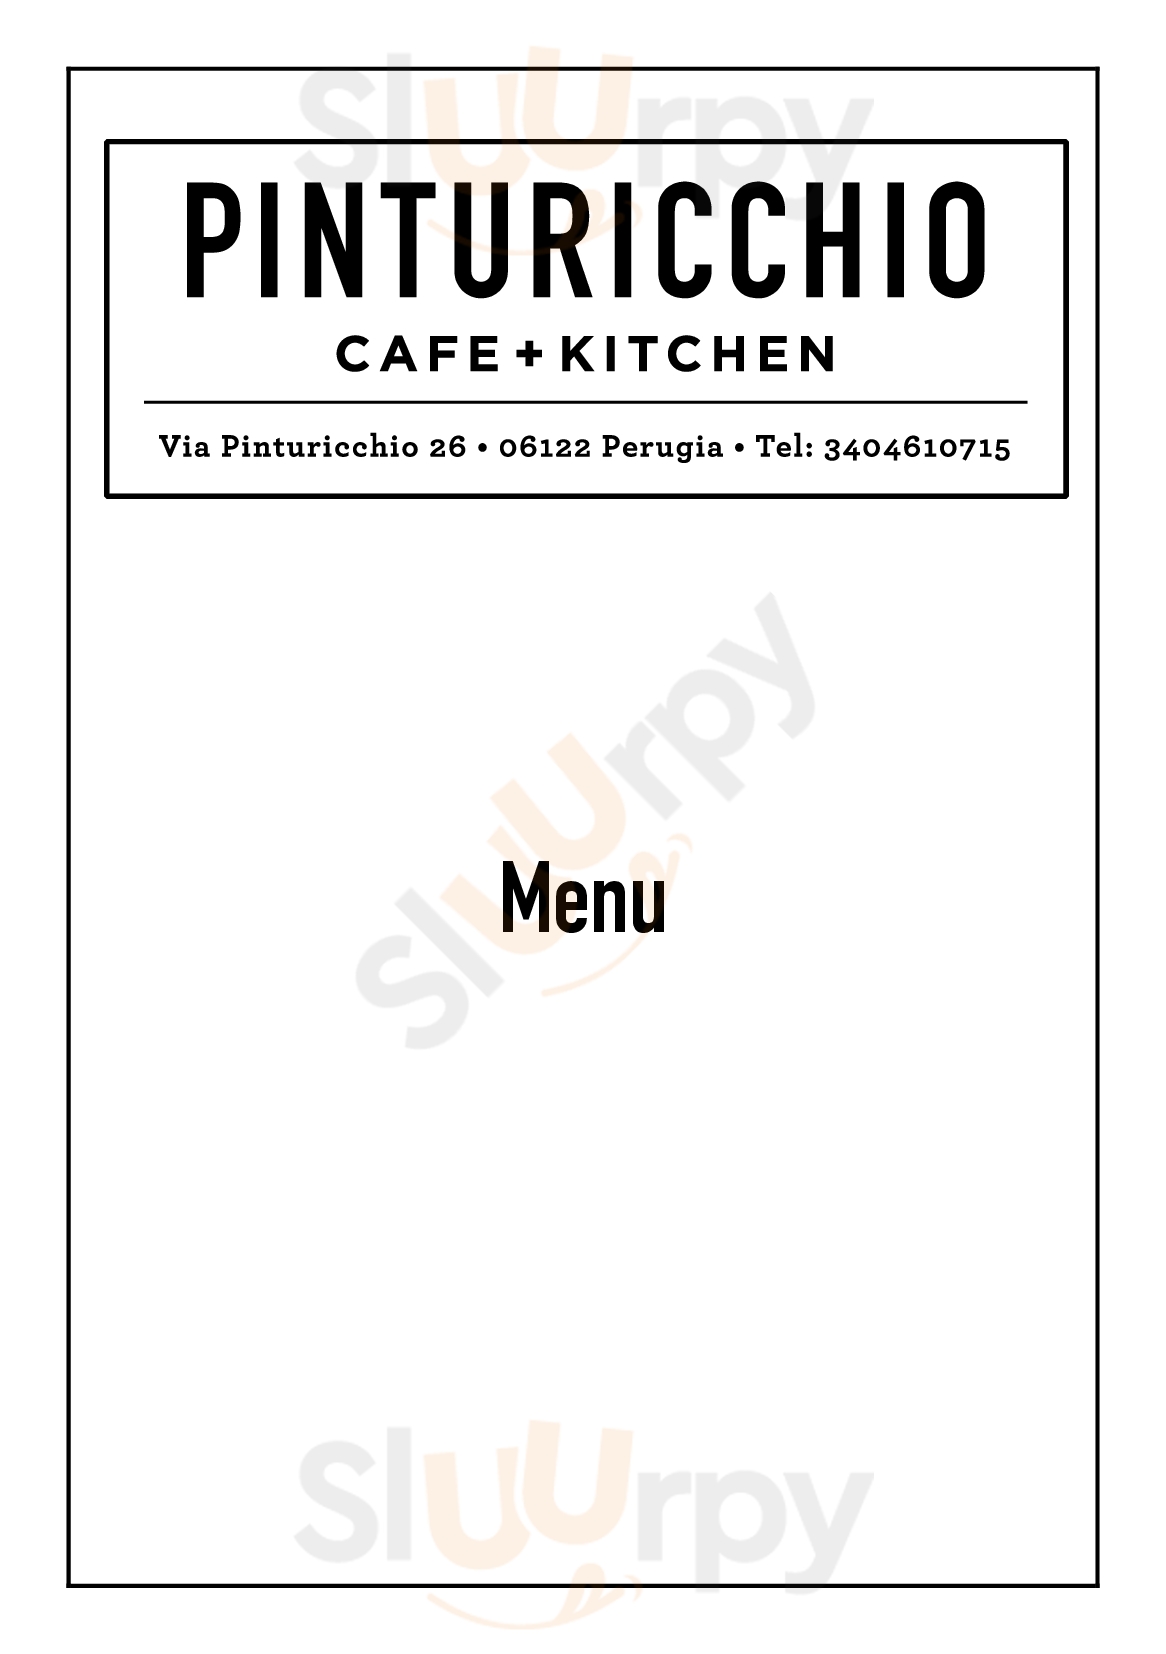 Pinturicchio Cafe+Kitchen Perugia menù 1 pagina